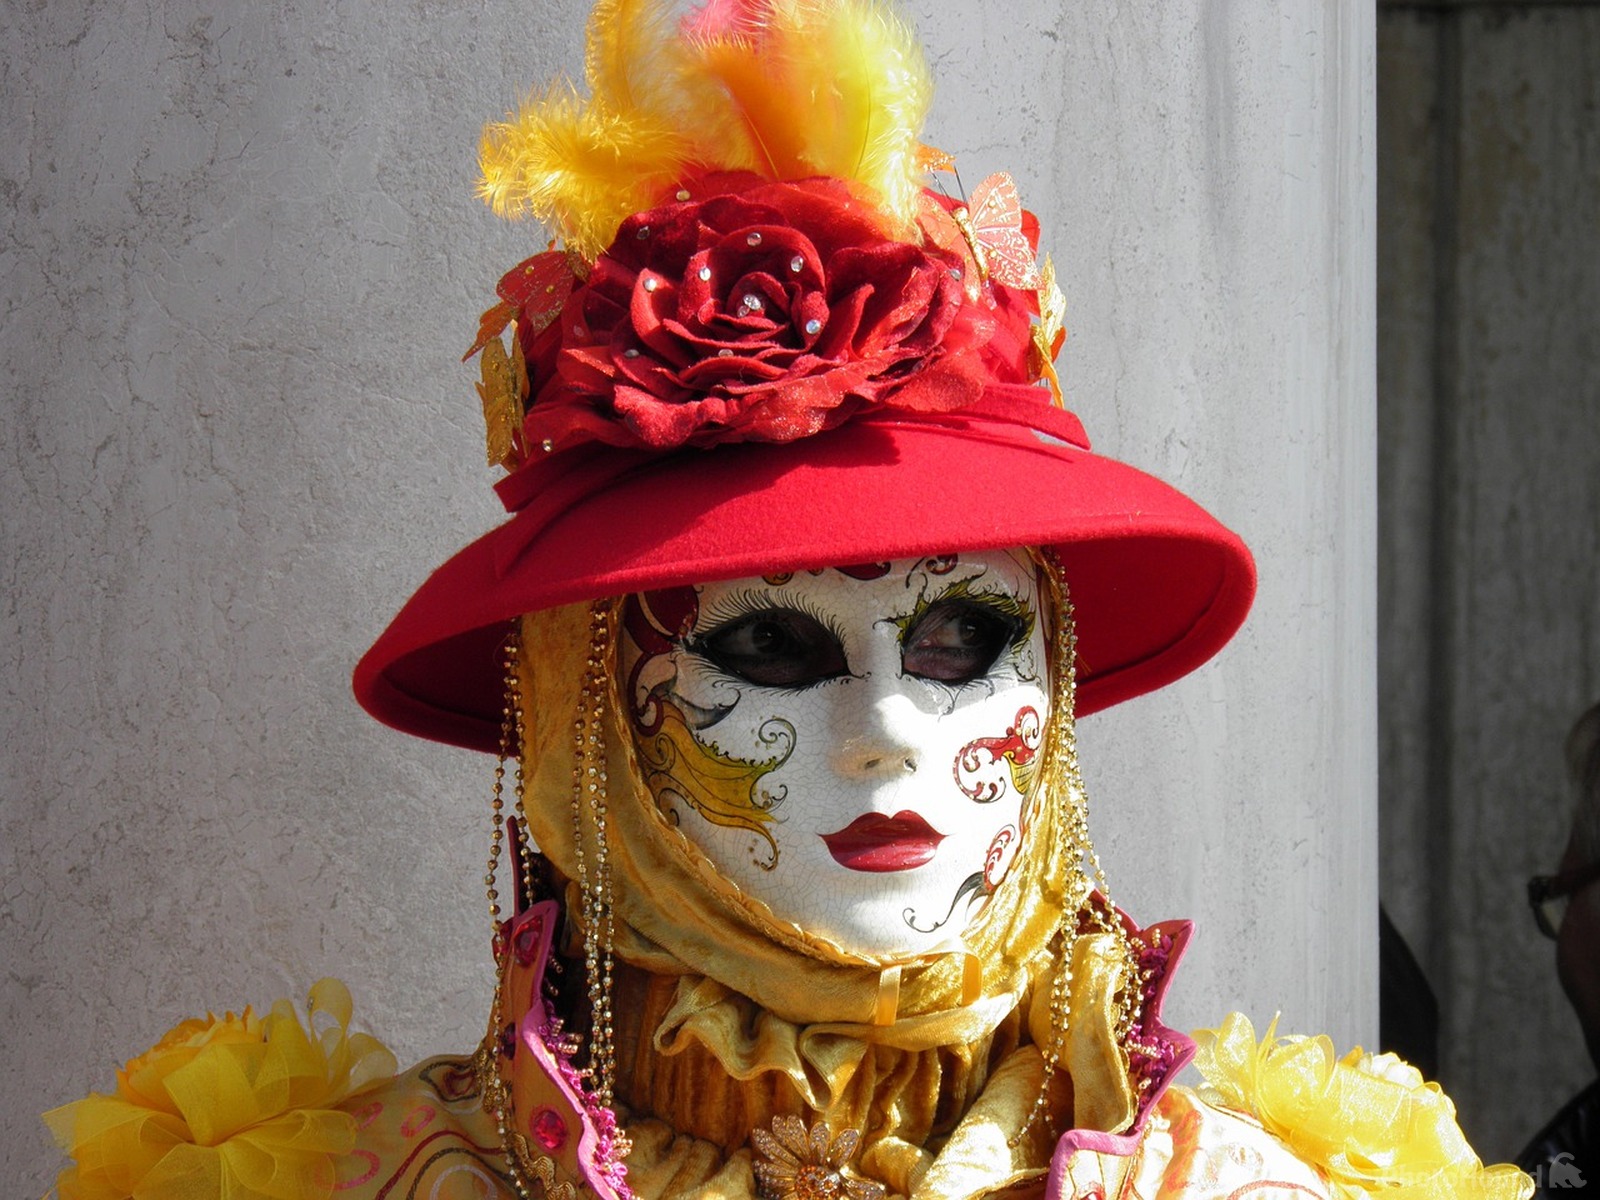 Image of Carnevale di Venezia (Venice Carnival) by Team PhotoHound